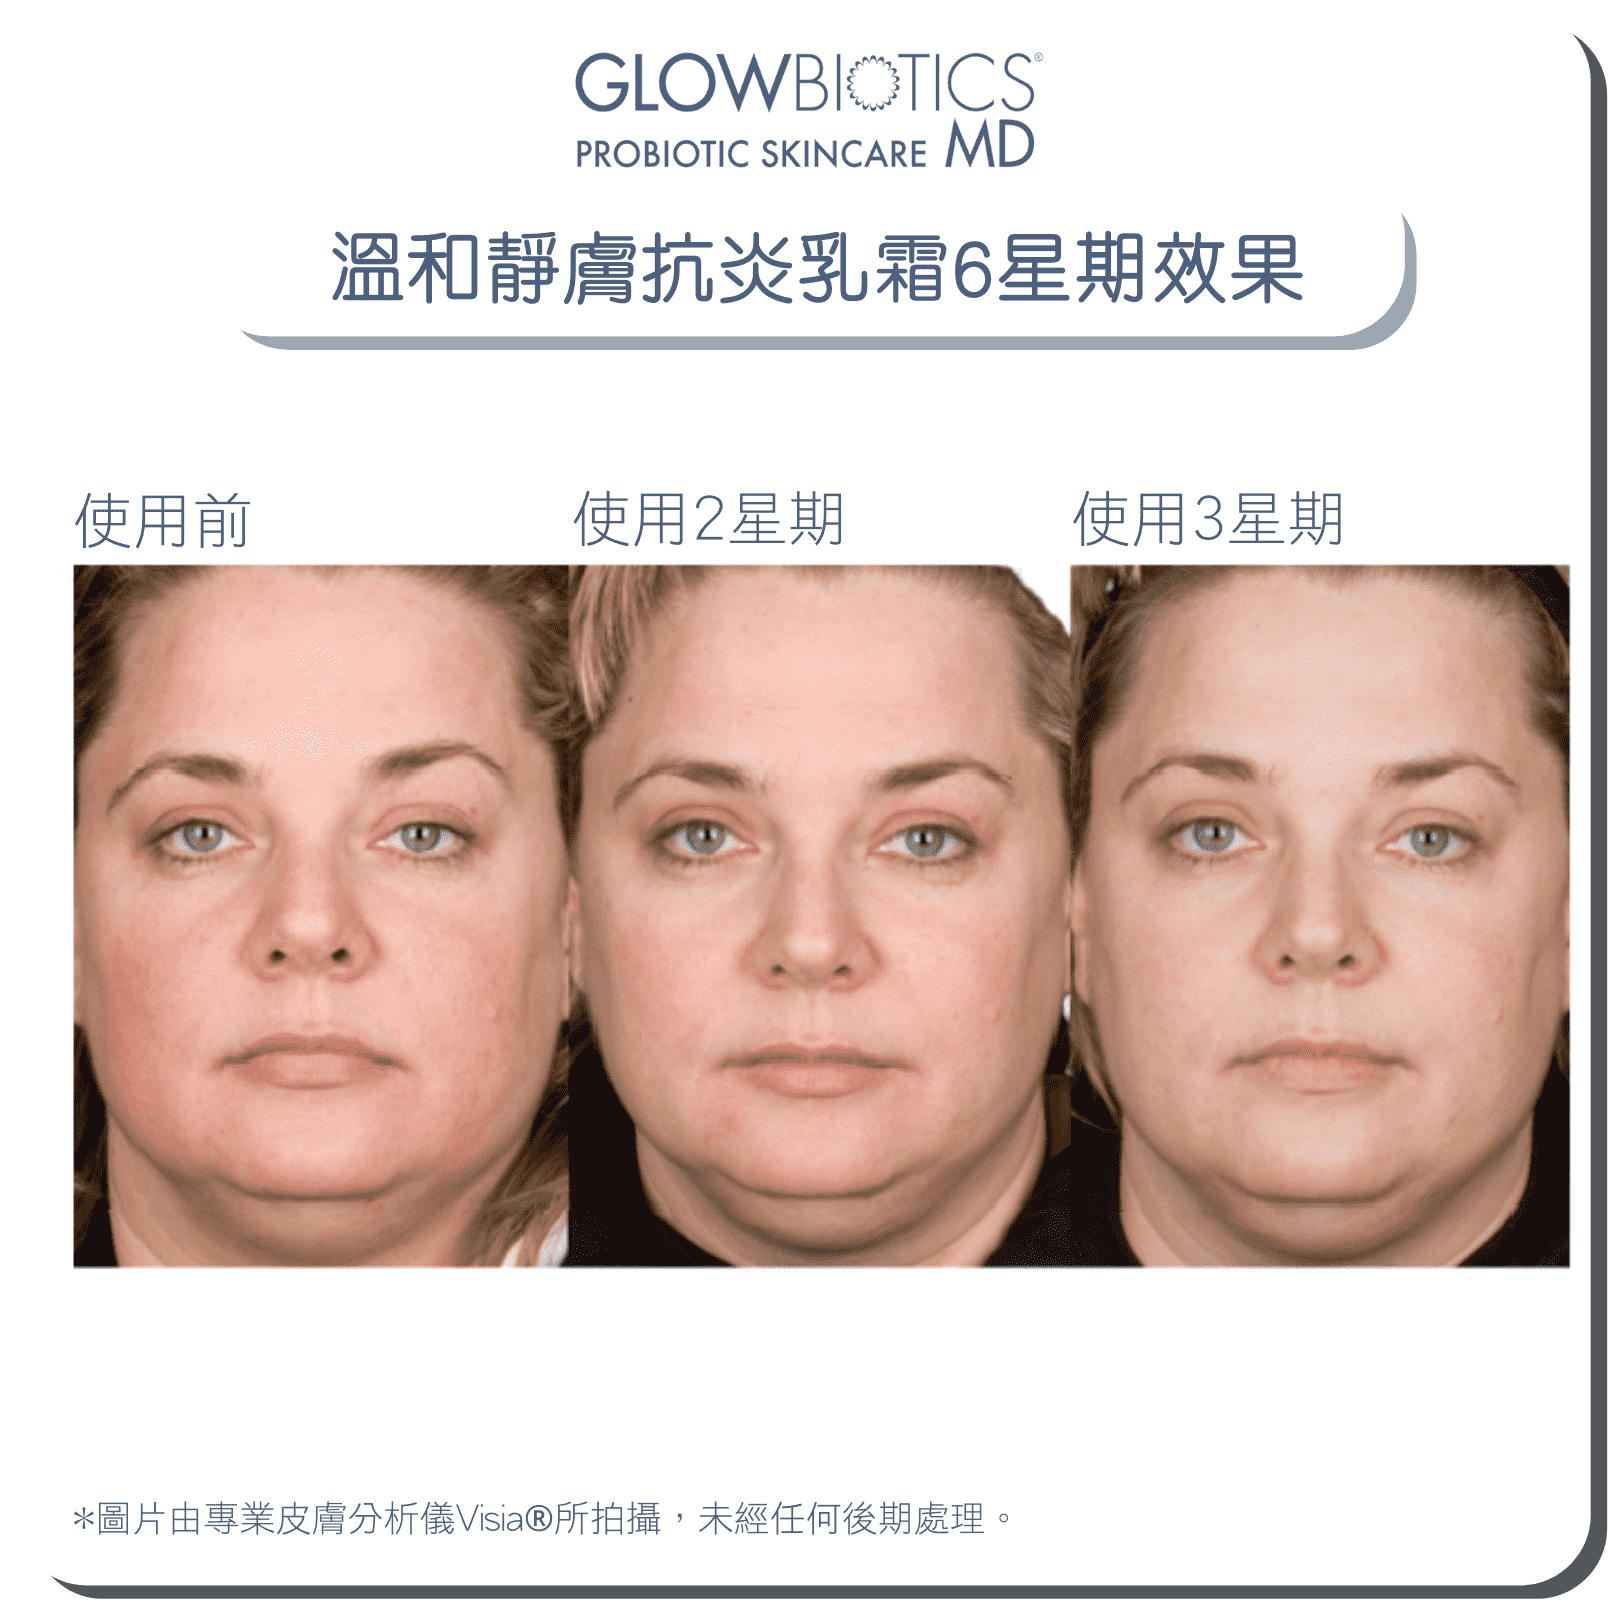 GLOWBIOTICS x 田豪祖3寶優惠益生菌抗敏保濕套裝 - Glowbiotics HK